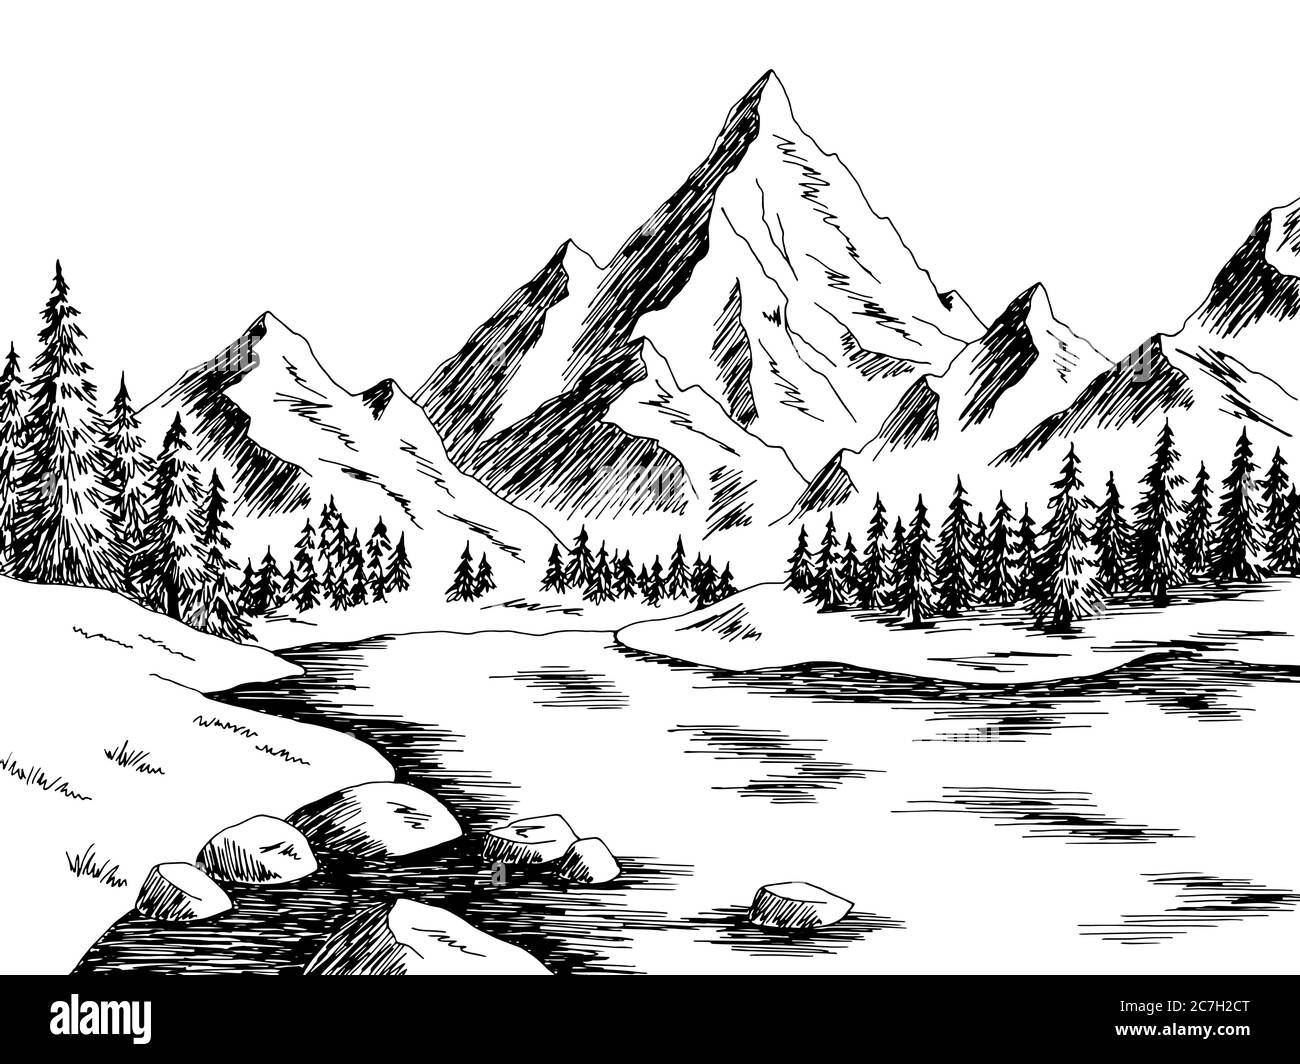 Mountain lake graphic black white landscape sketch illustration vector  Stock Vector Image & Art - Alamy